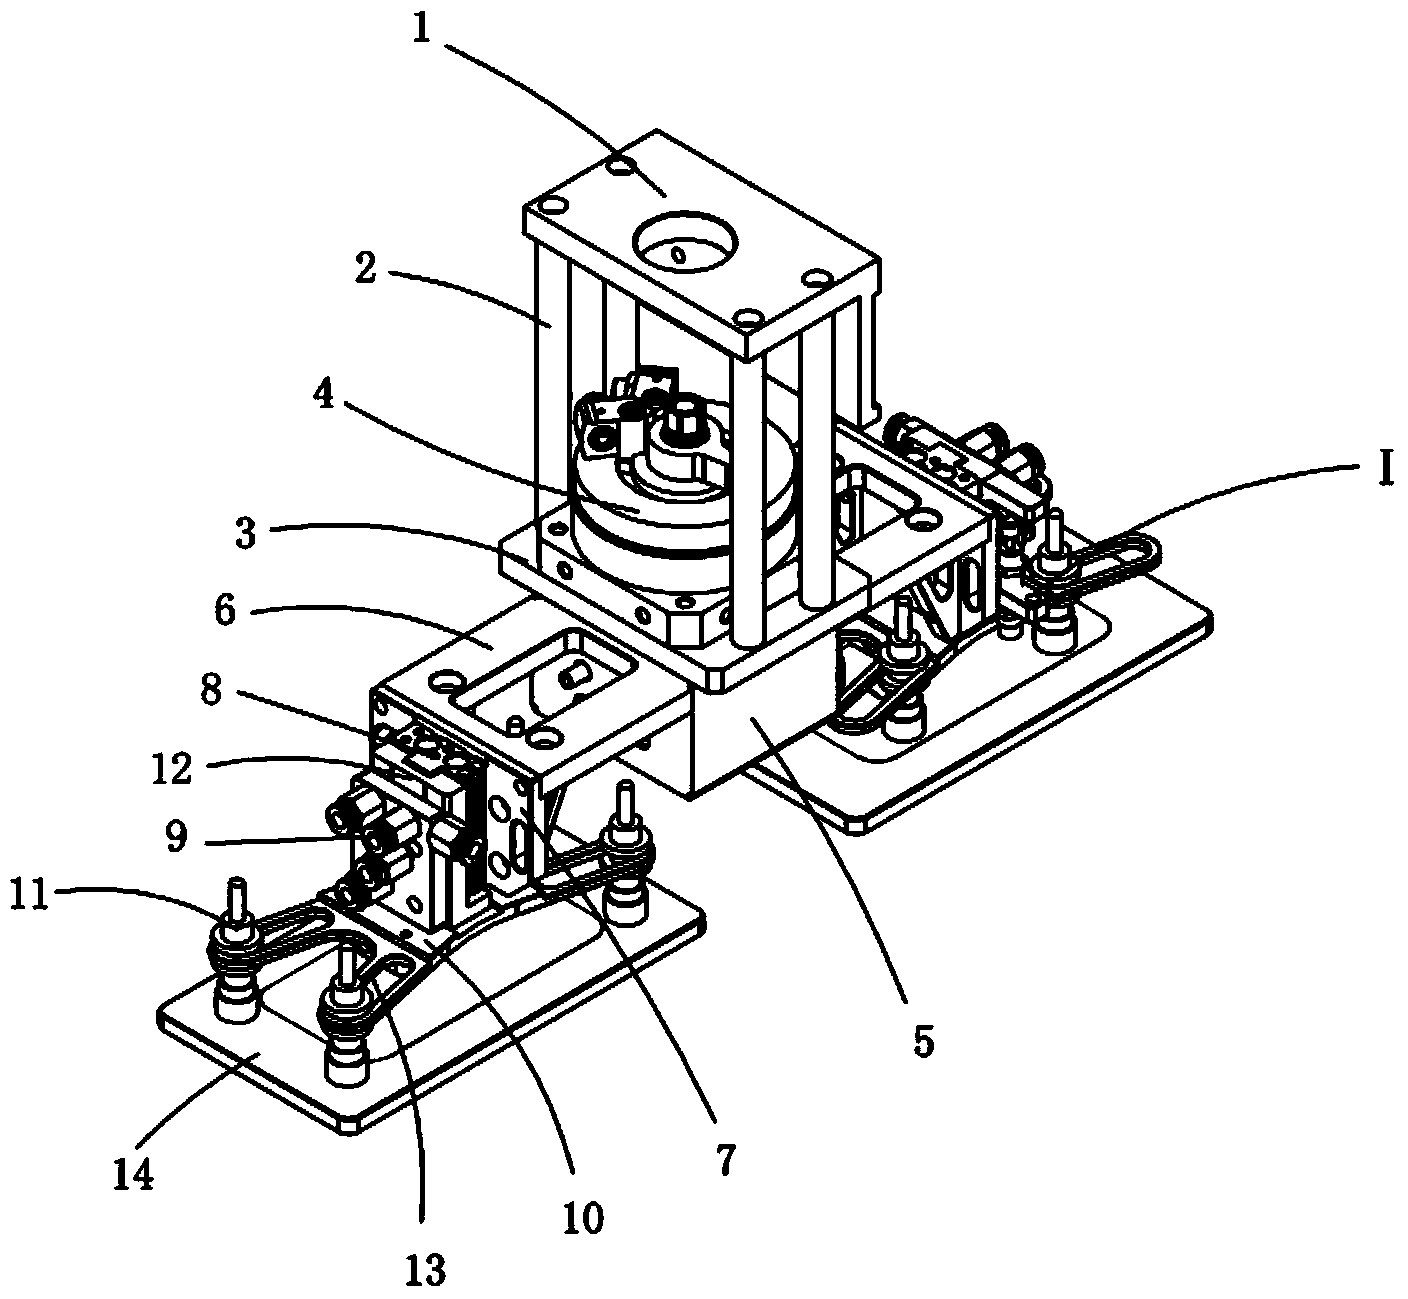 Automatic grabbing mechanism